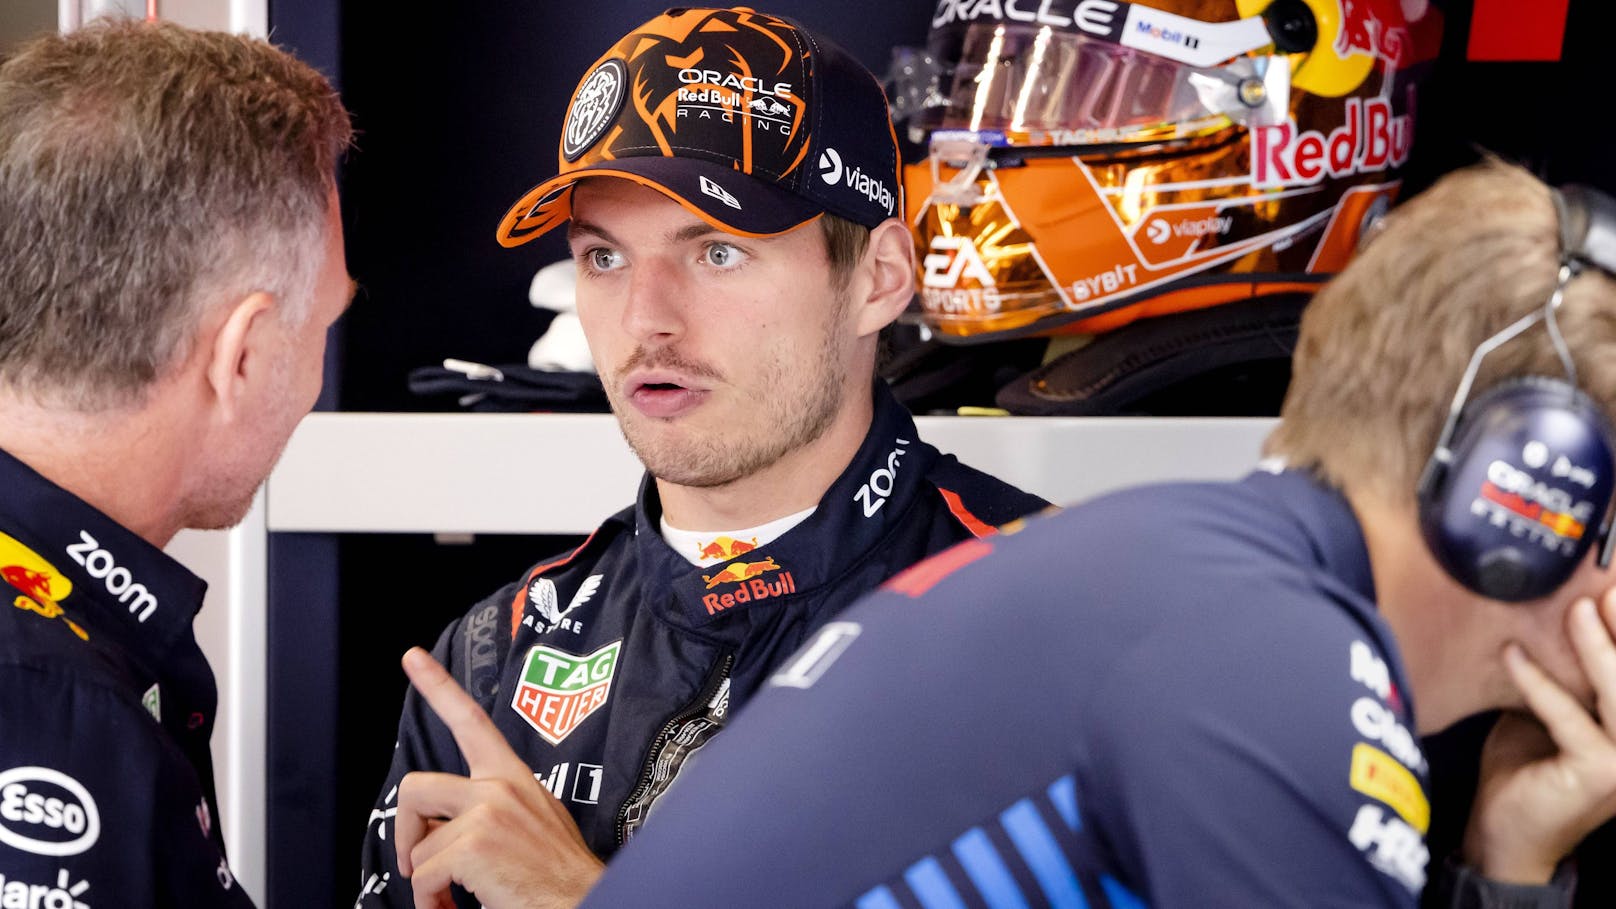 Rivale teilt aus: "Red Bull hat Angst vor Verstappen"